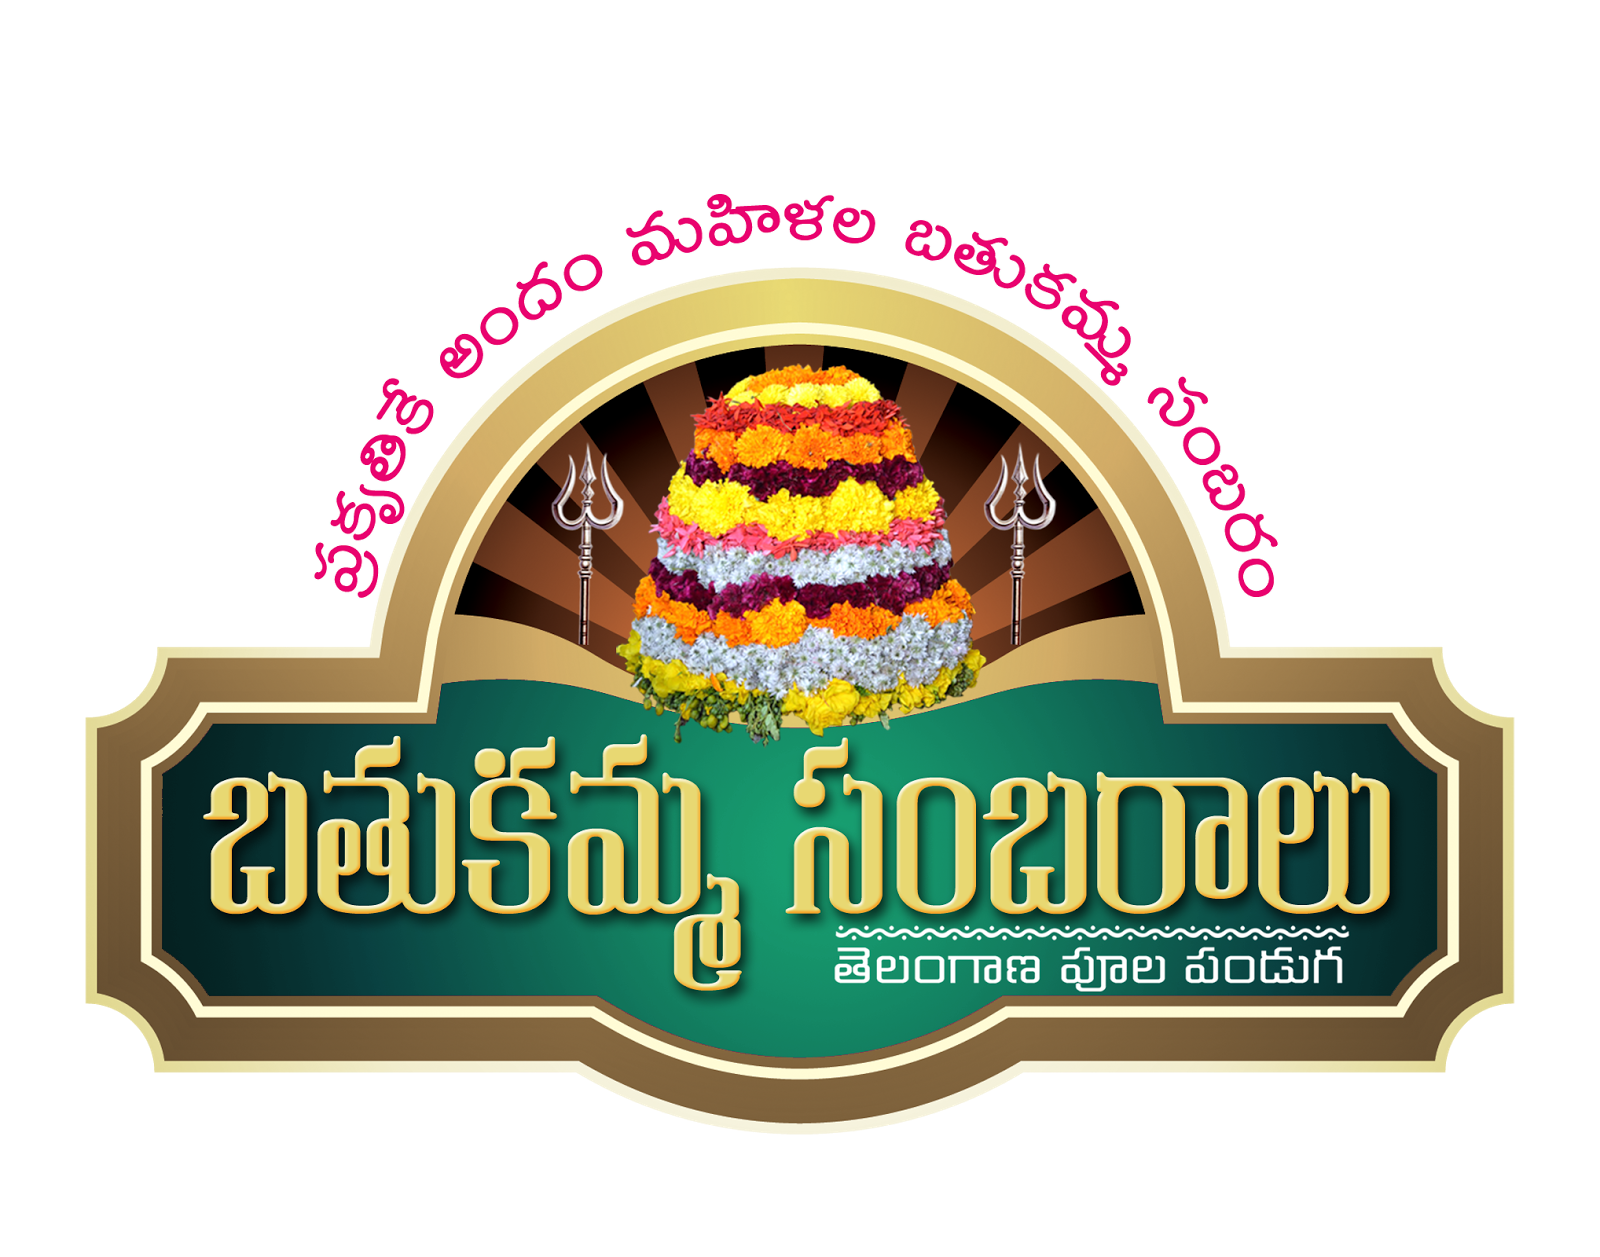 bathukamma sambaralu hd logo design free downloads | naveengfx